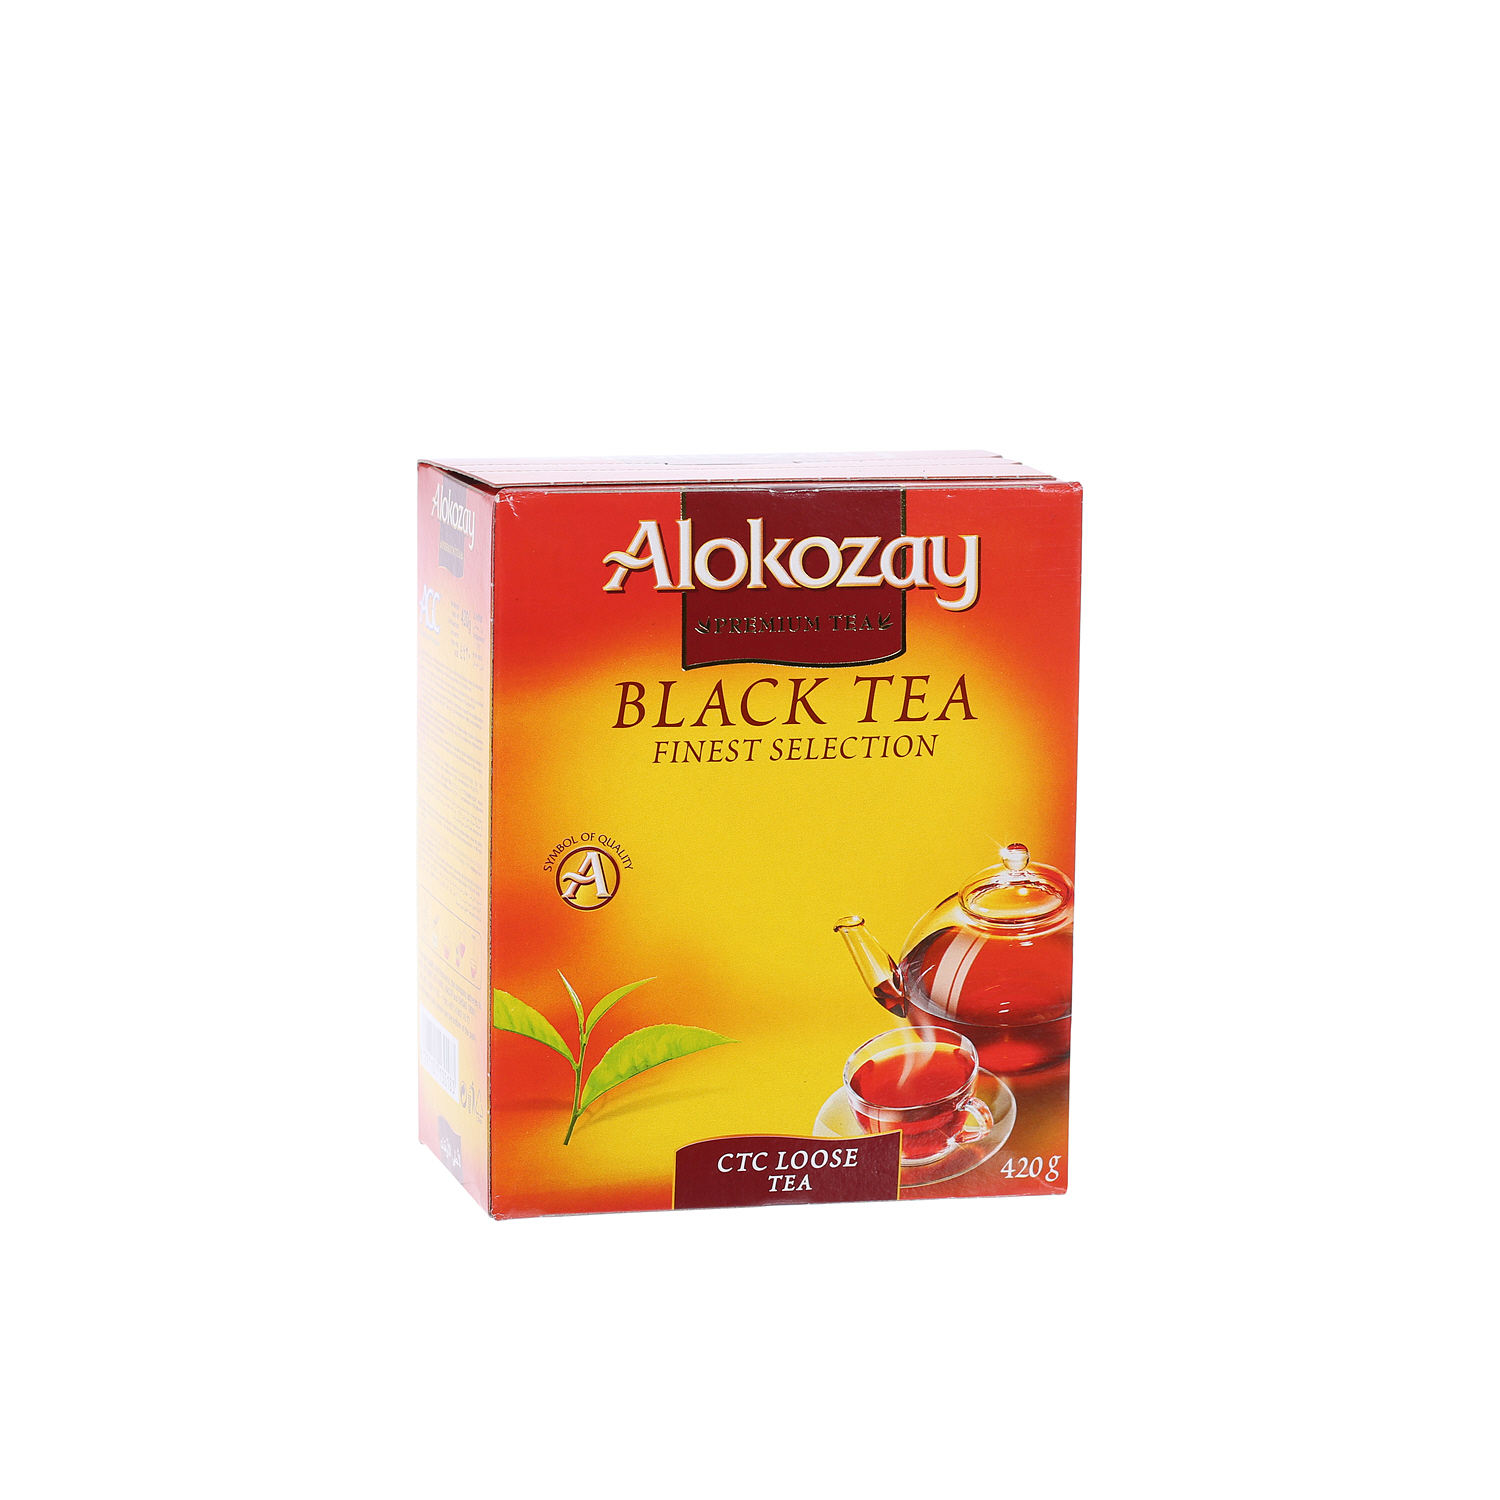 Alokozay Loose Tea 420gm